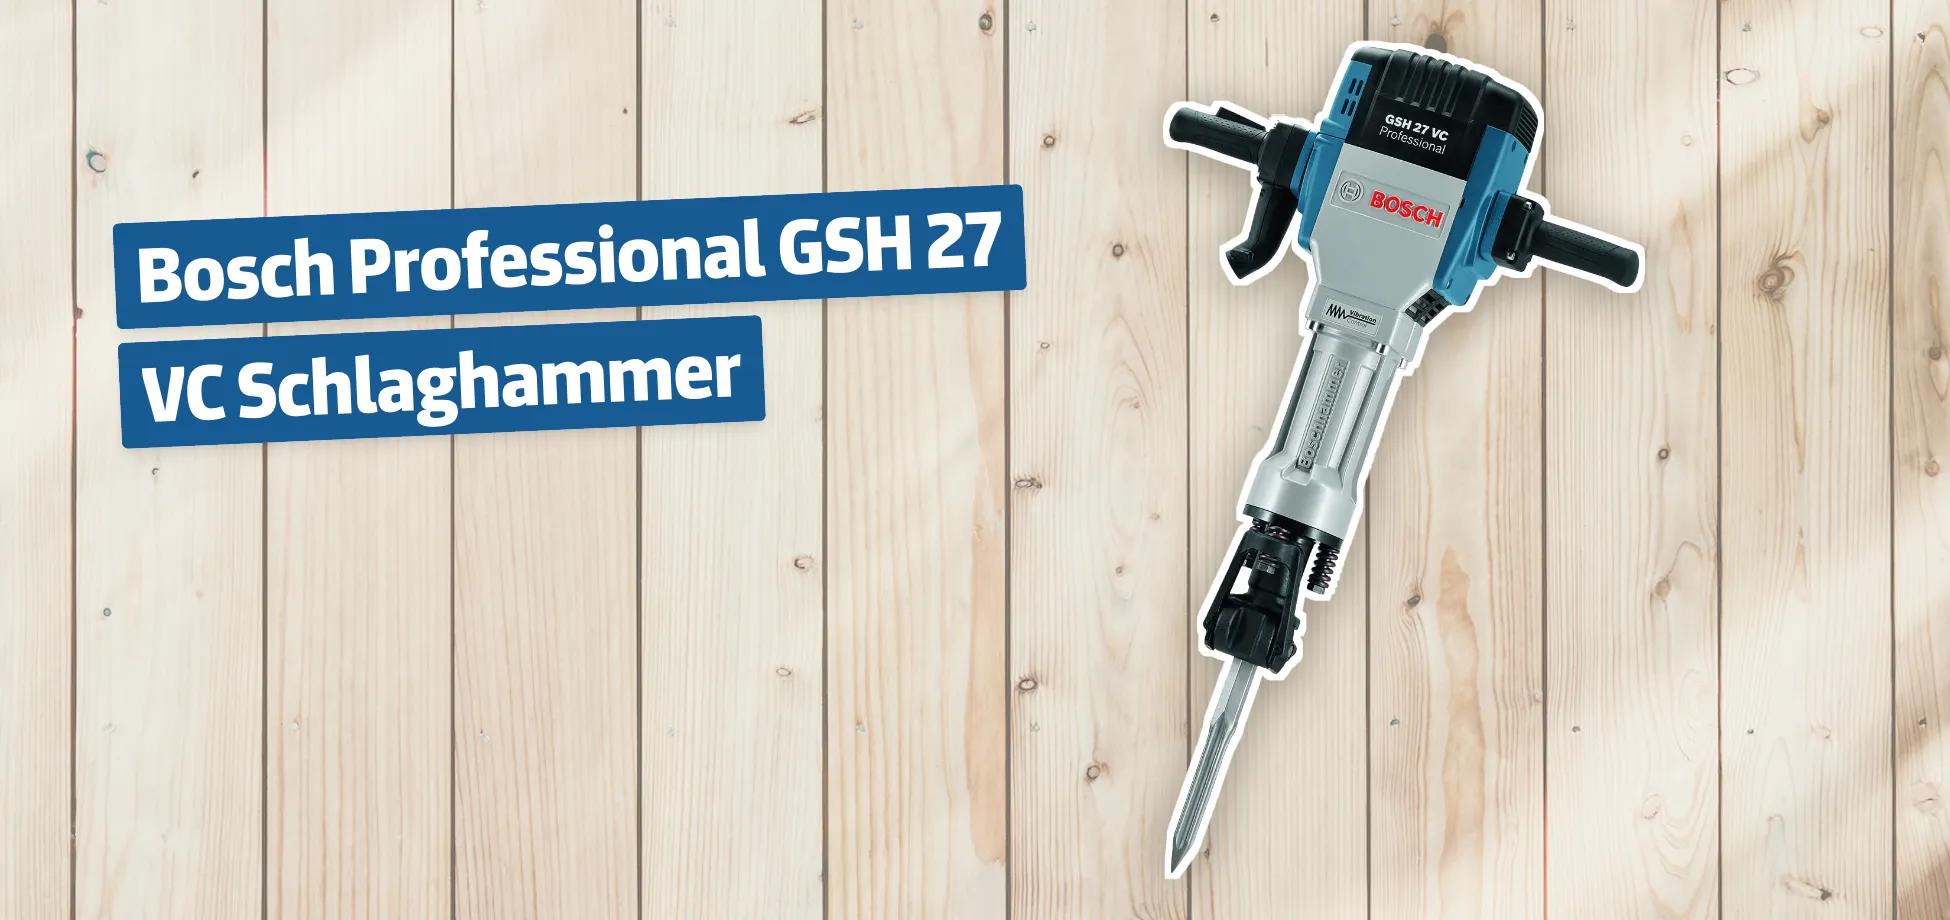 Bosch Professional GSH 27 VC Schlaghammer